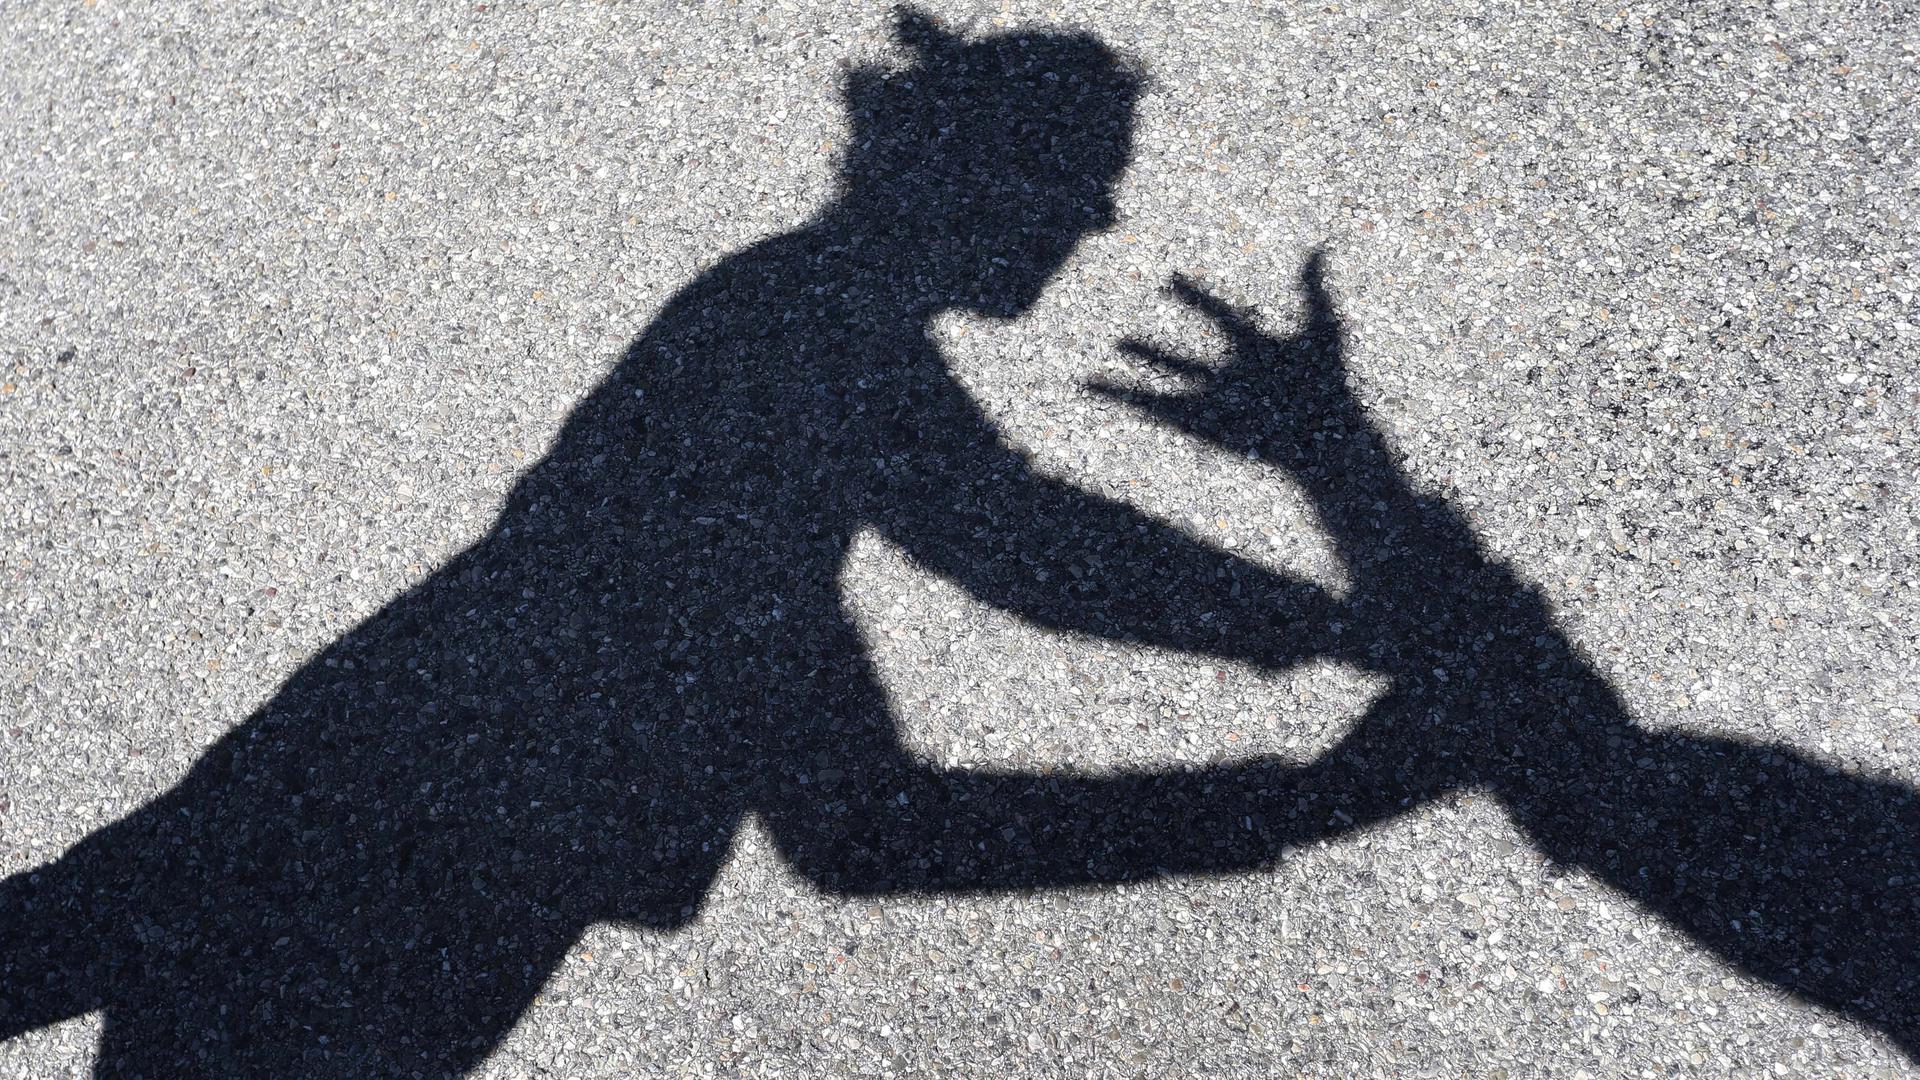 Schatten auf dem Boden: Mann erhebt Hand gegen Frau